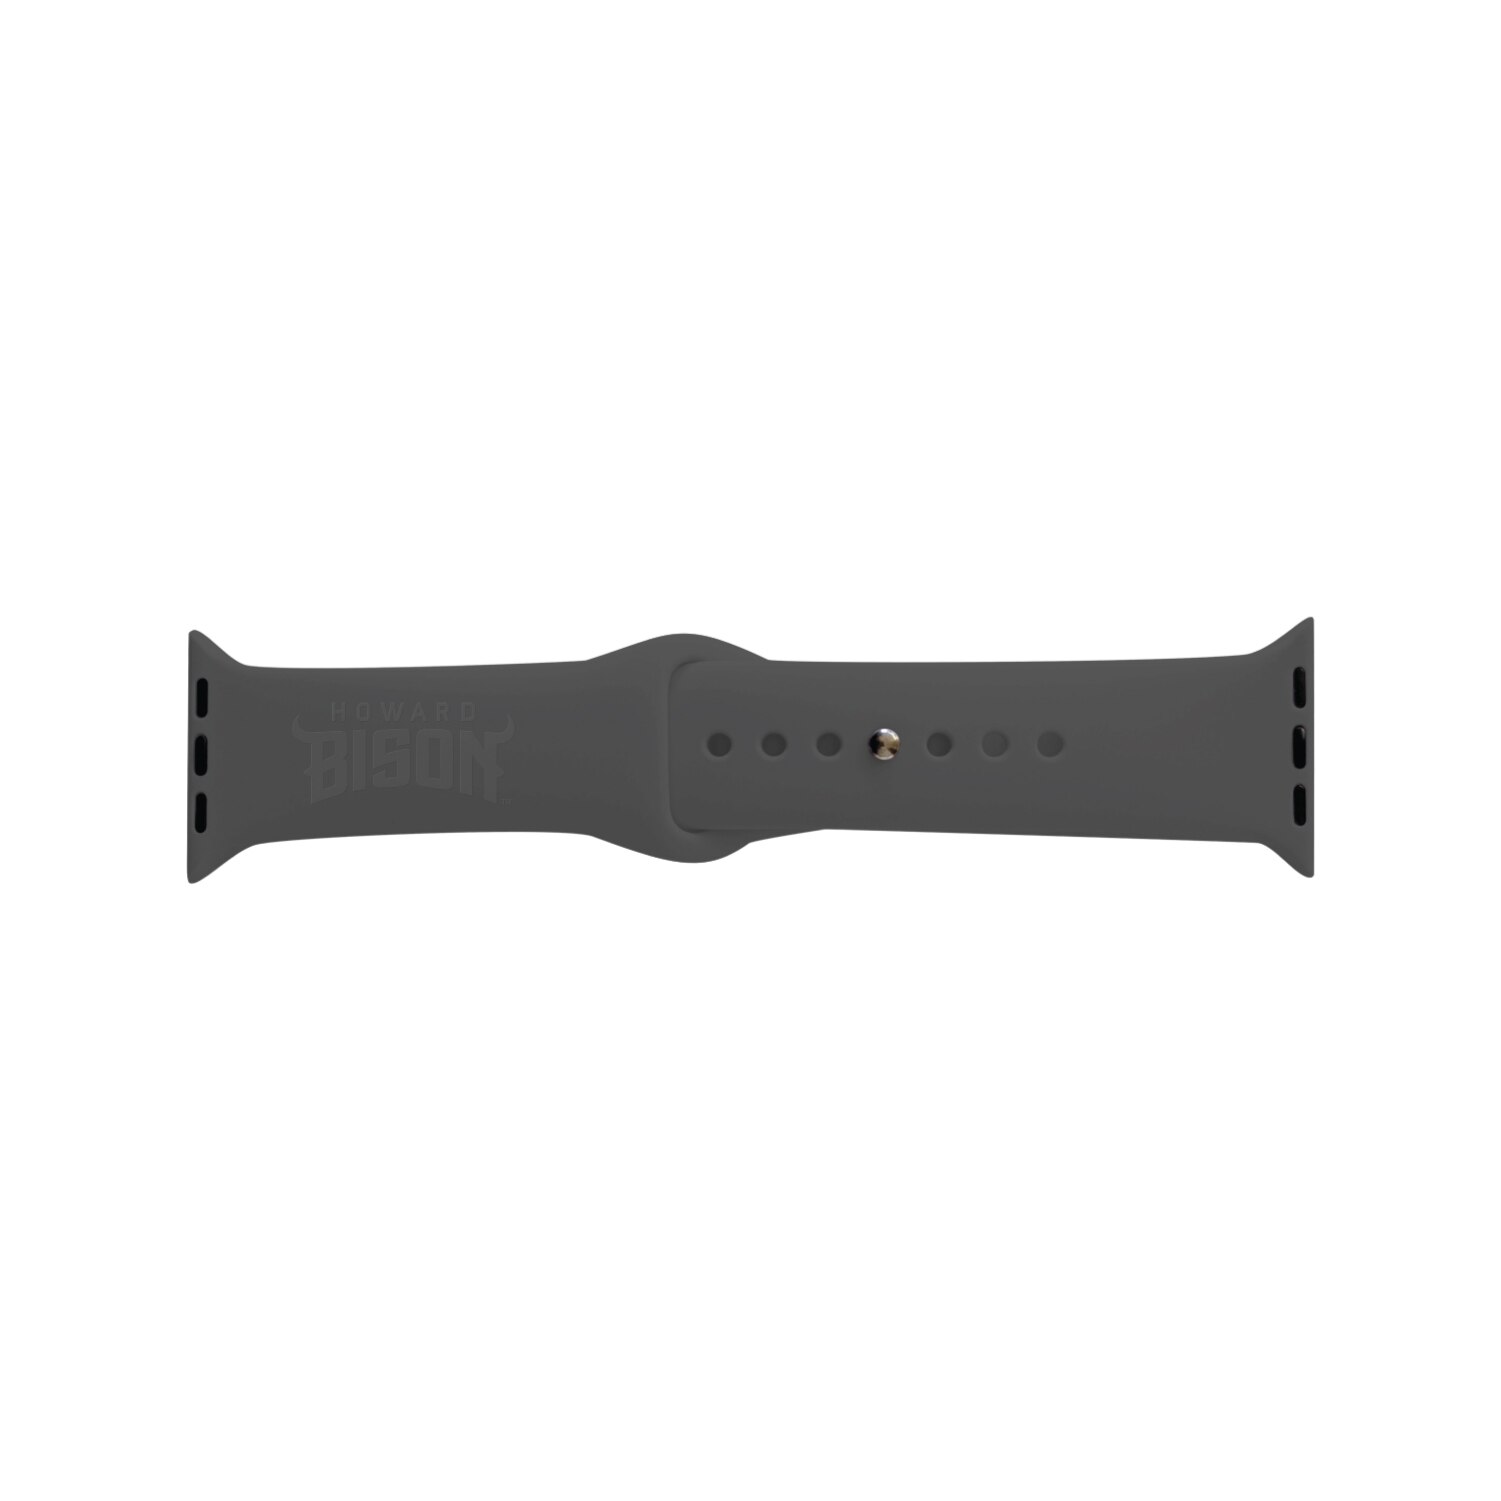 Howard University V2 - Apple Watch Wrist Band, 38/40mm, Charcoal Matte, Classic V1